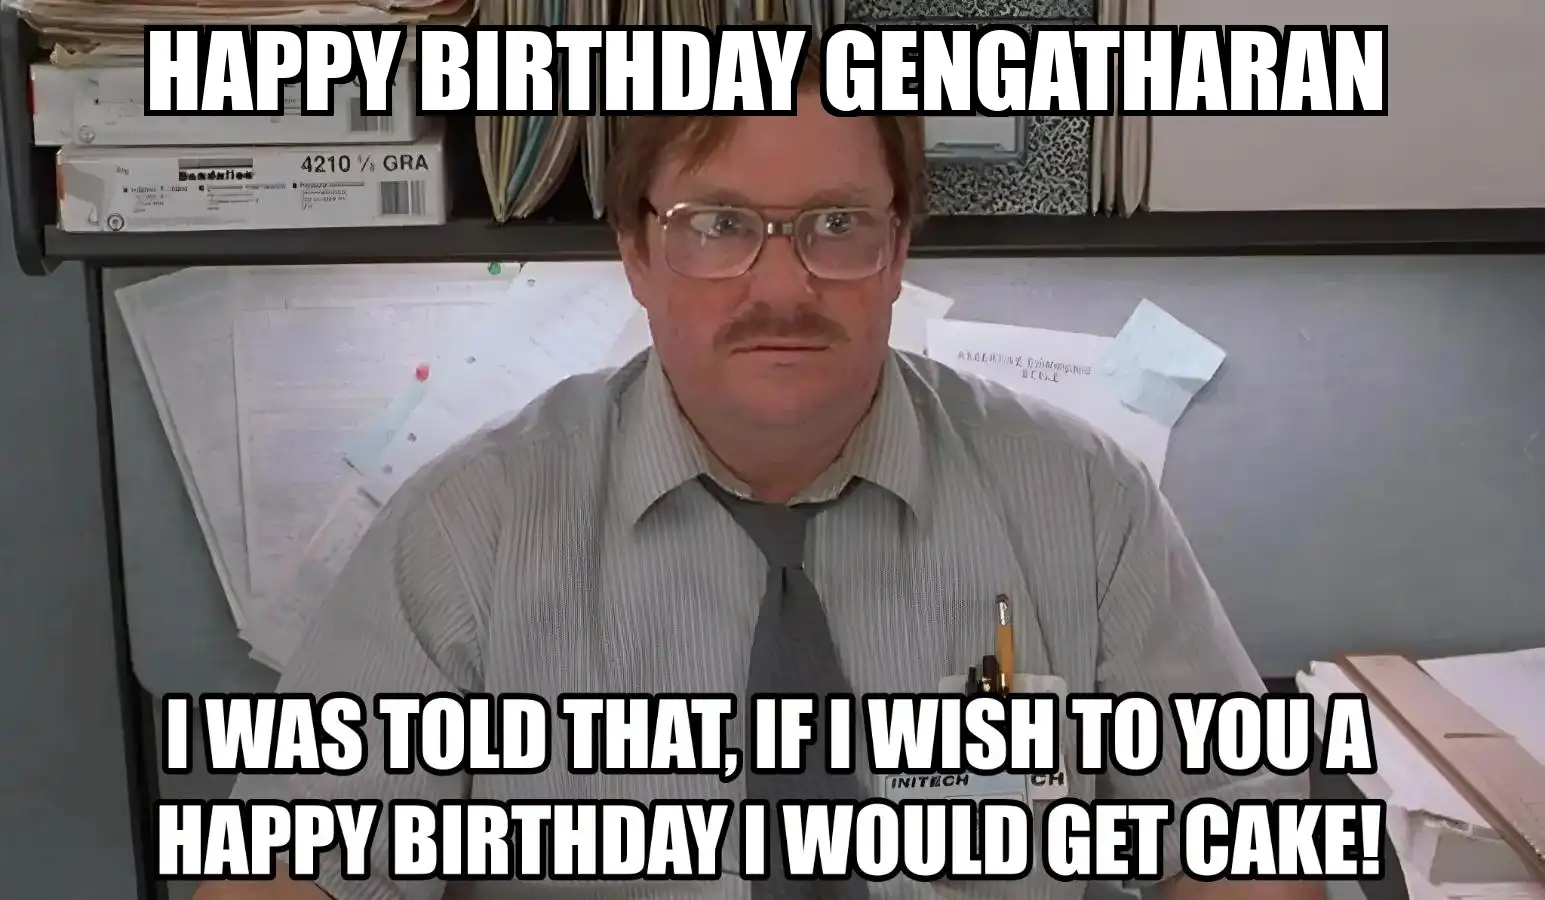 Happy Birthday Gengatharan I Would Get A Cake Meme